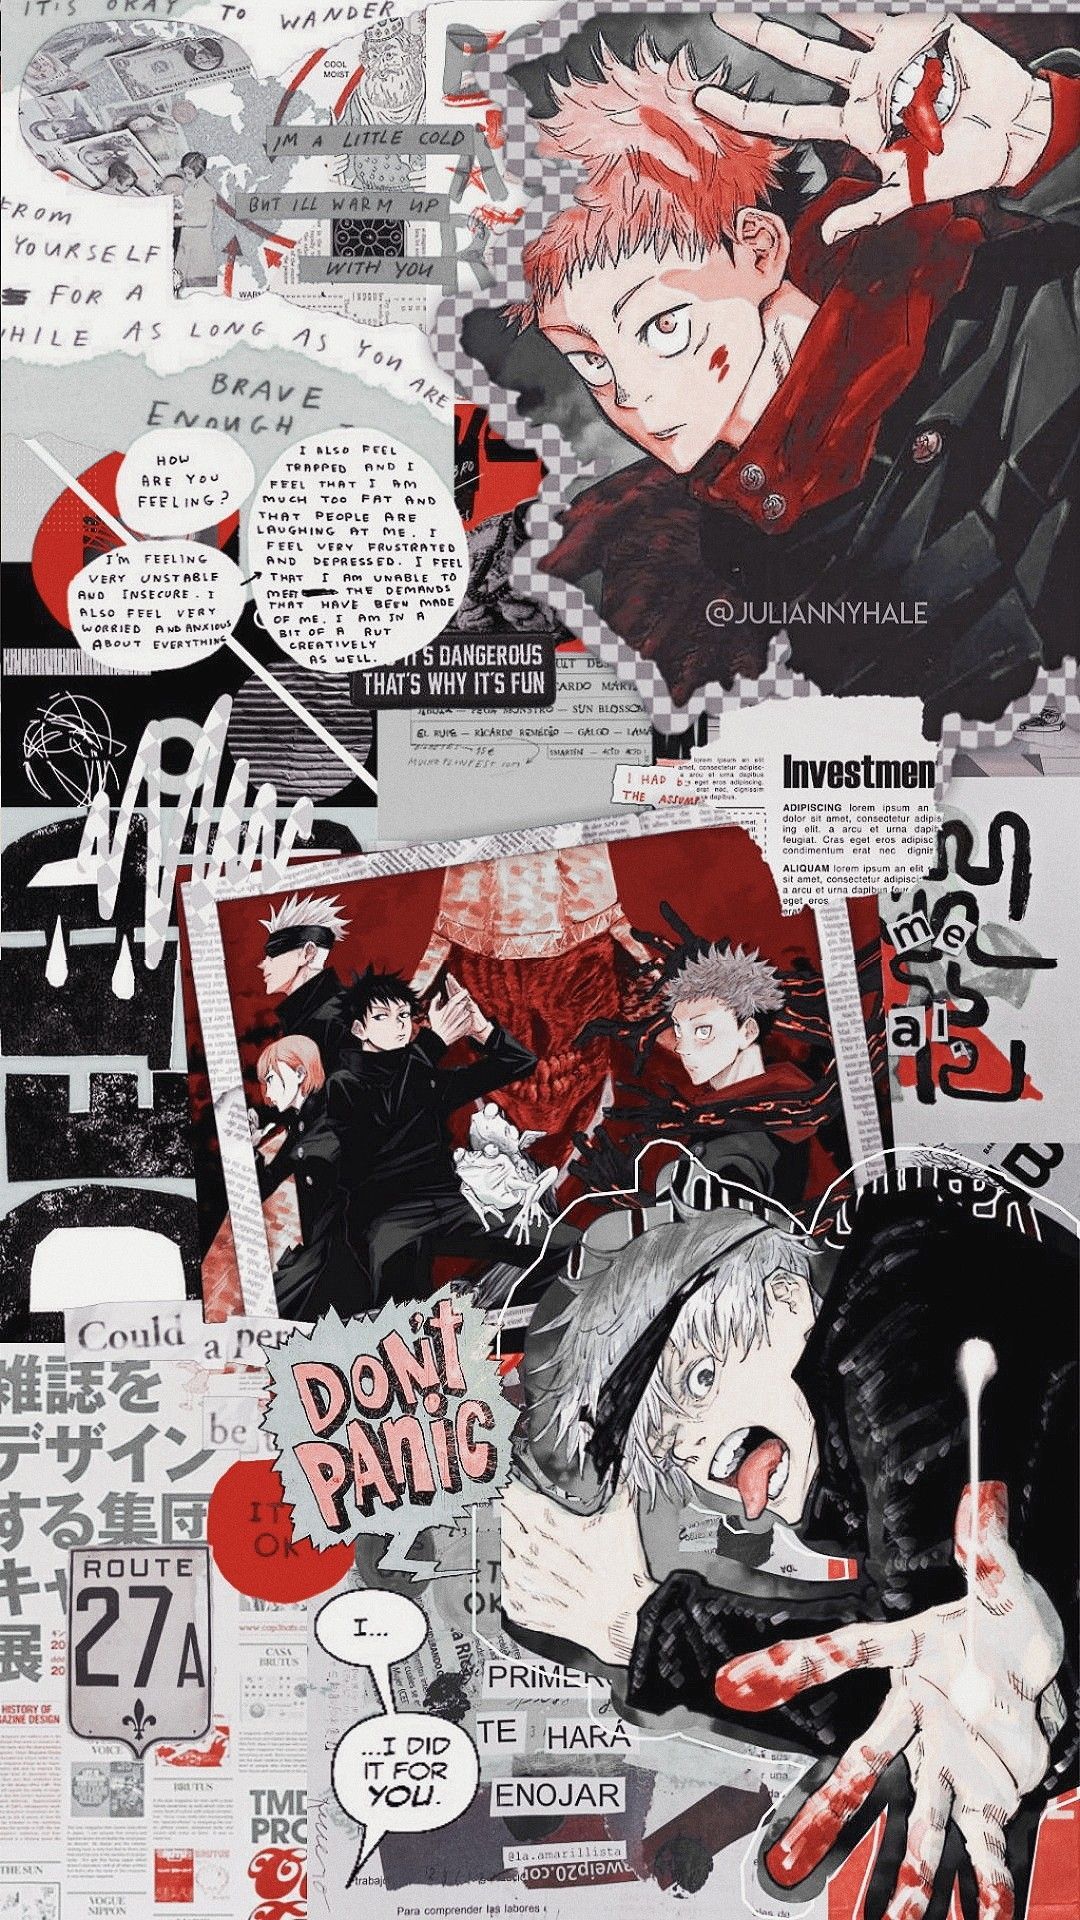 Jujutsu Kaisen Anime Characters Wallpaper iPhone Phone 4K #5770e